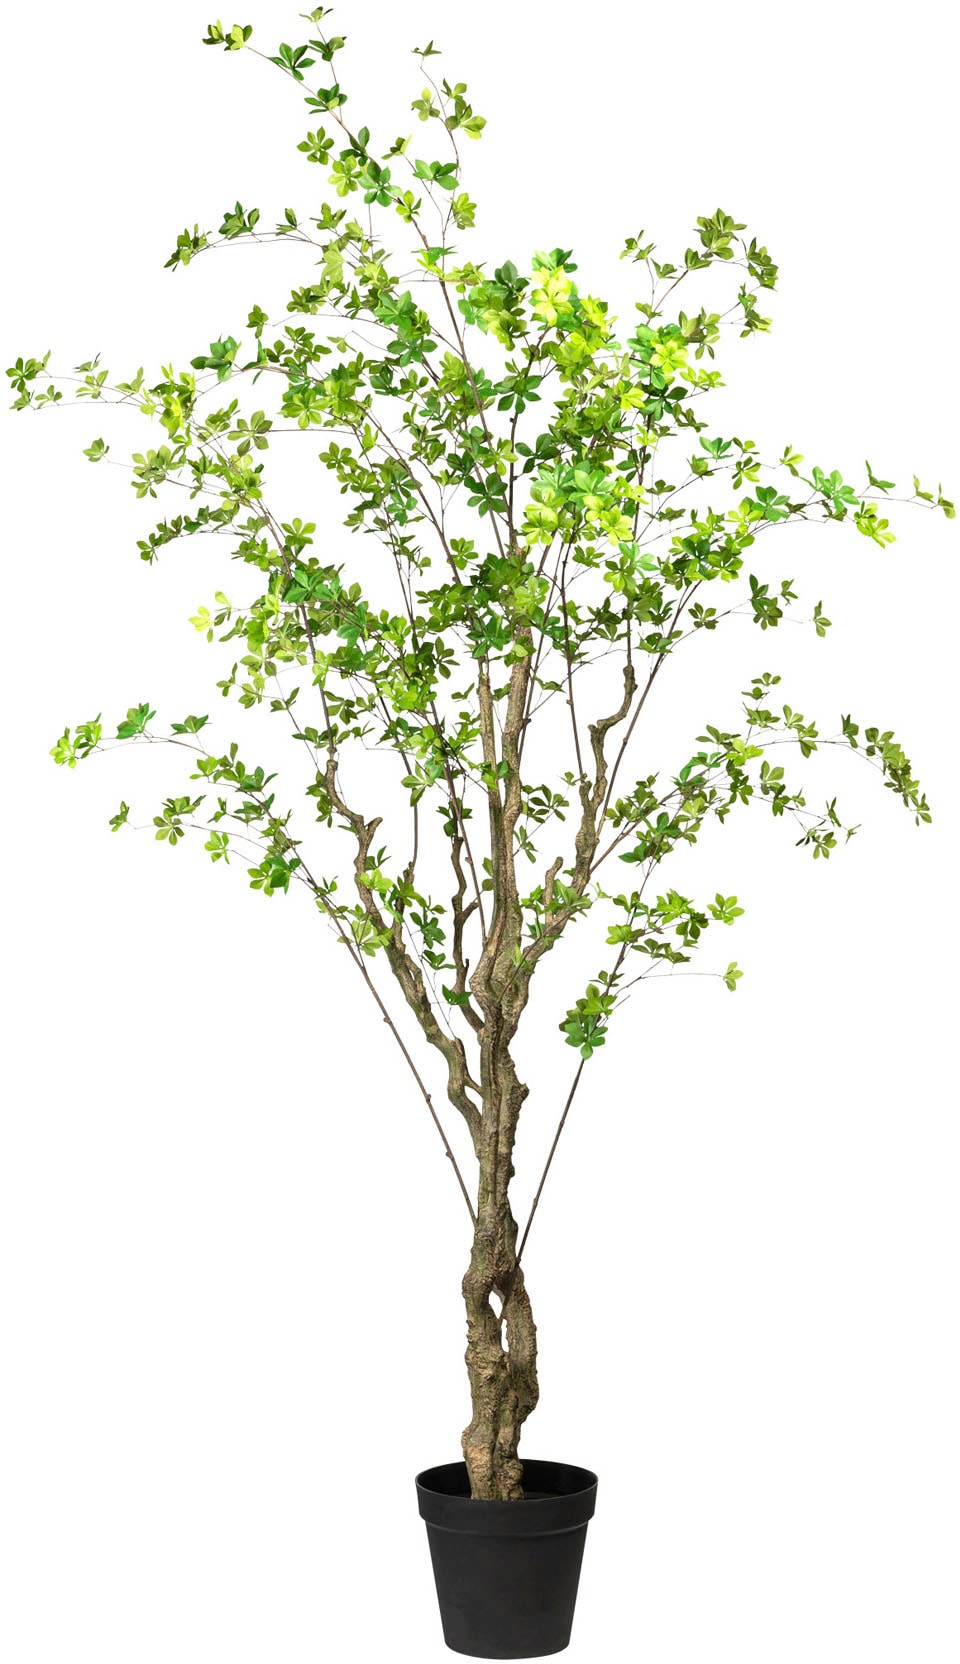 Creativ green »Louisiana-Baum« jetzt kaufen Kunstbaum